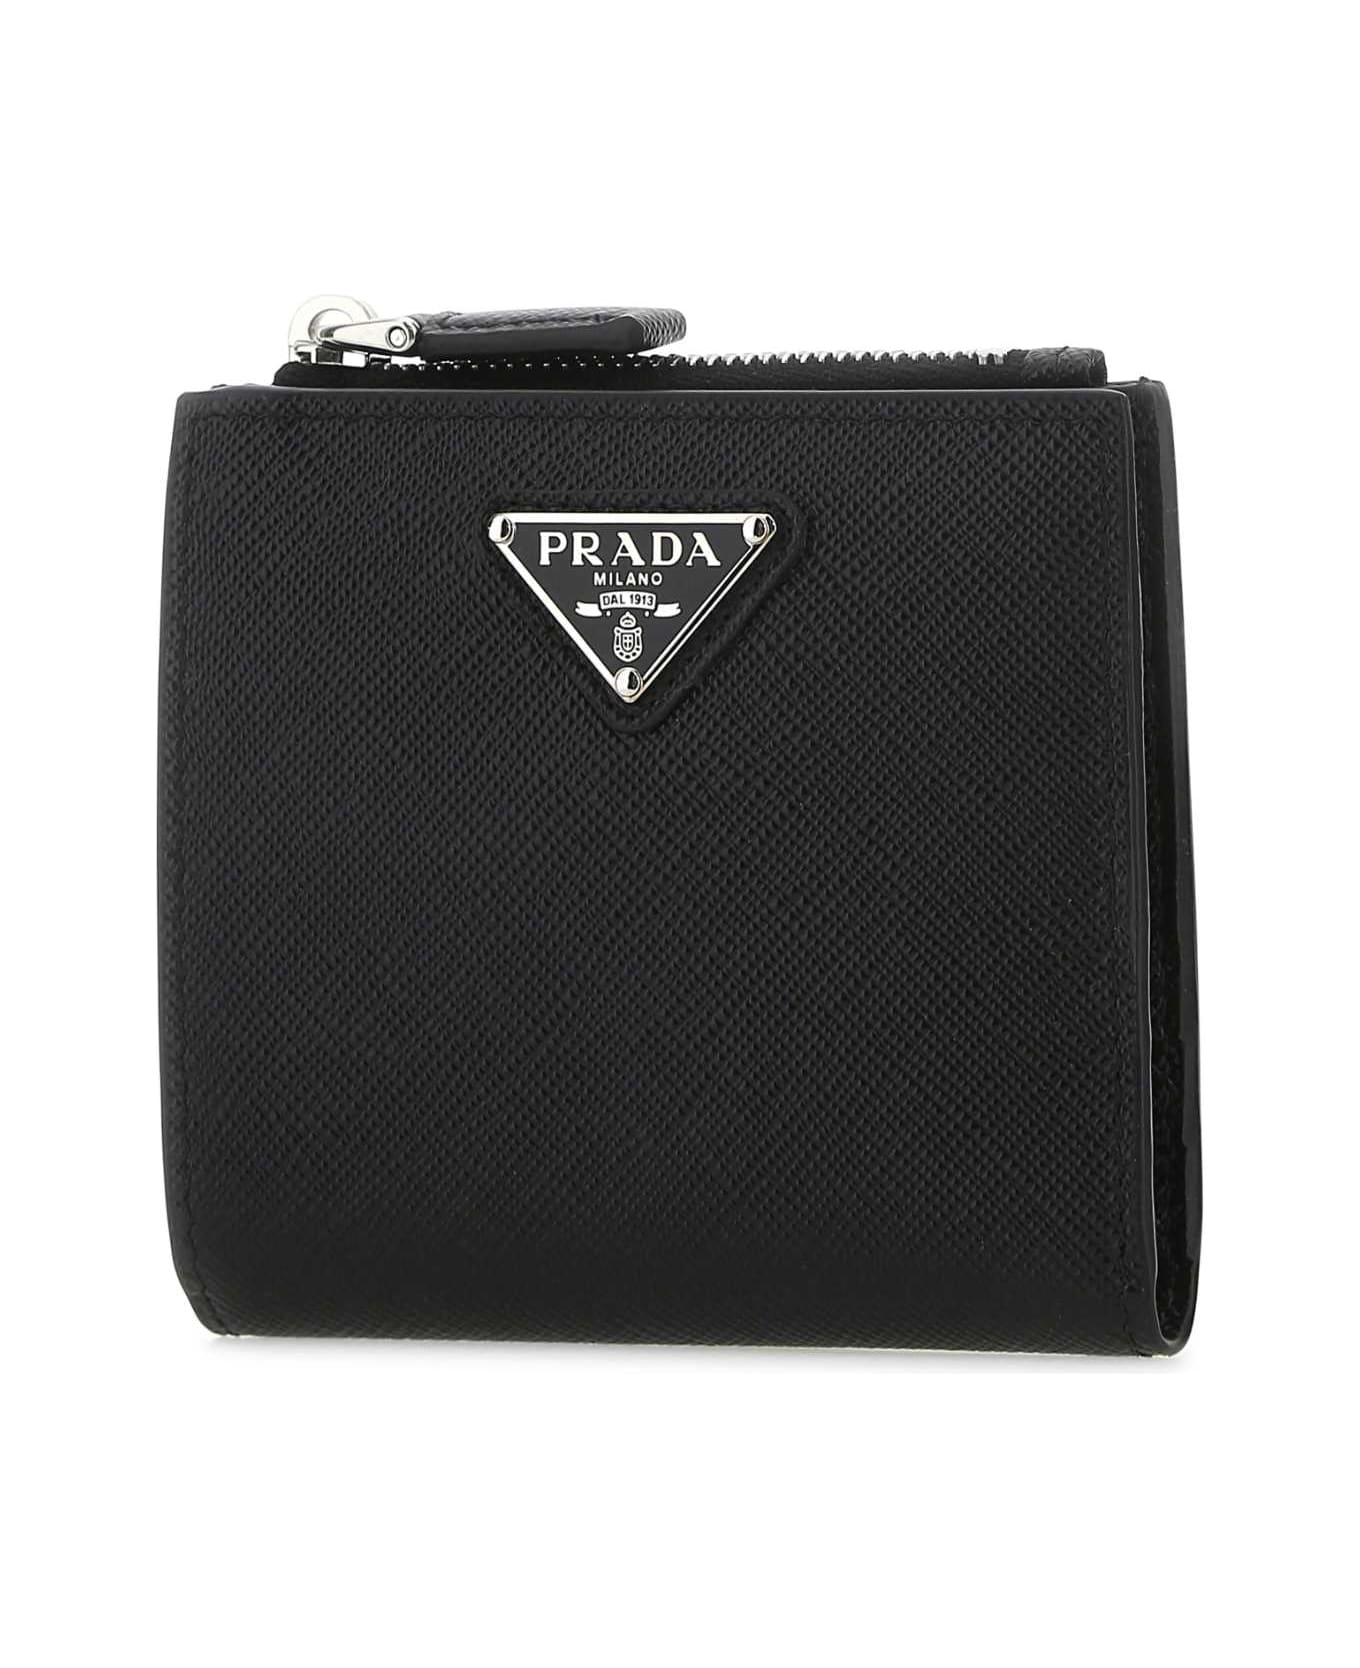 Prada Black Leather Wallet - F0002 財布